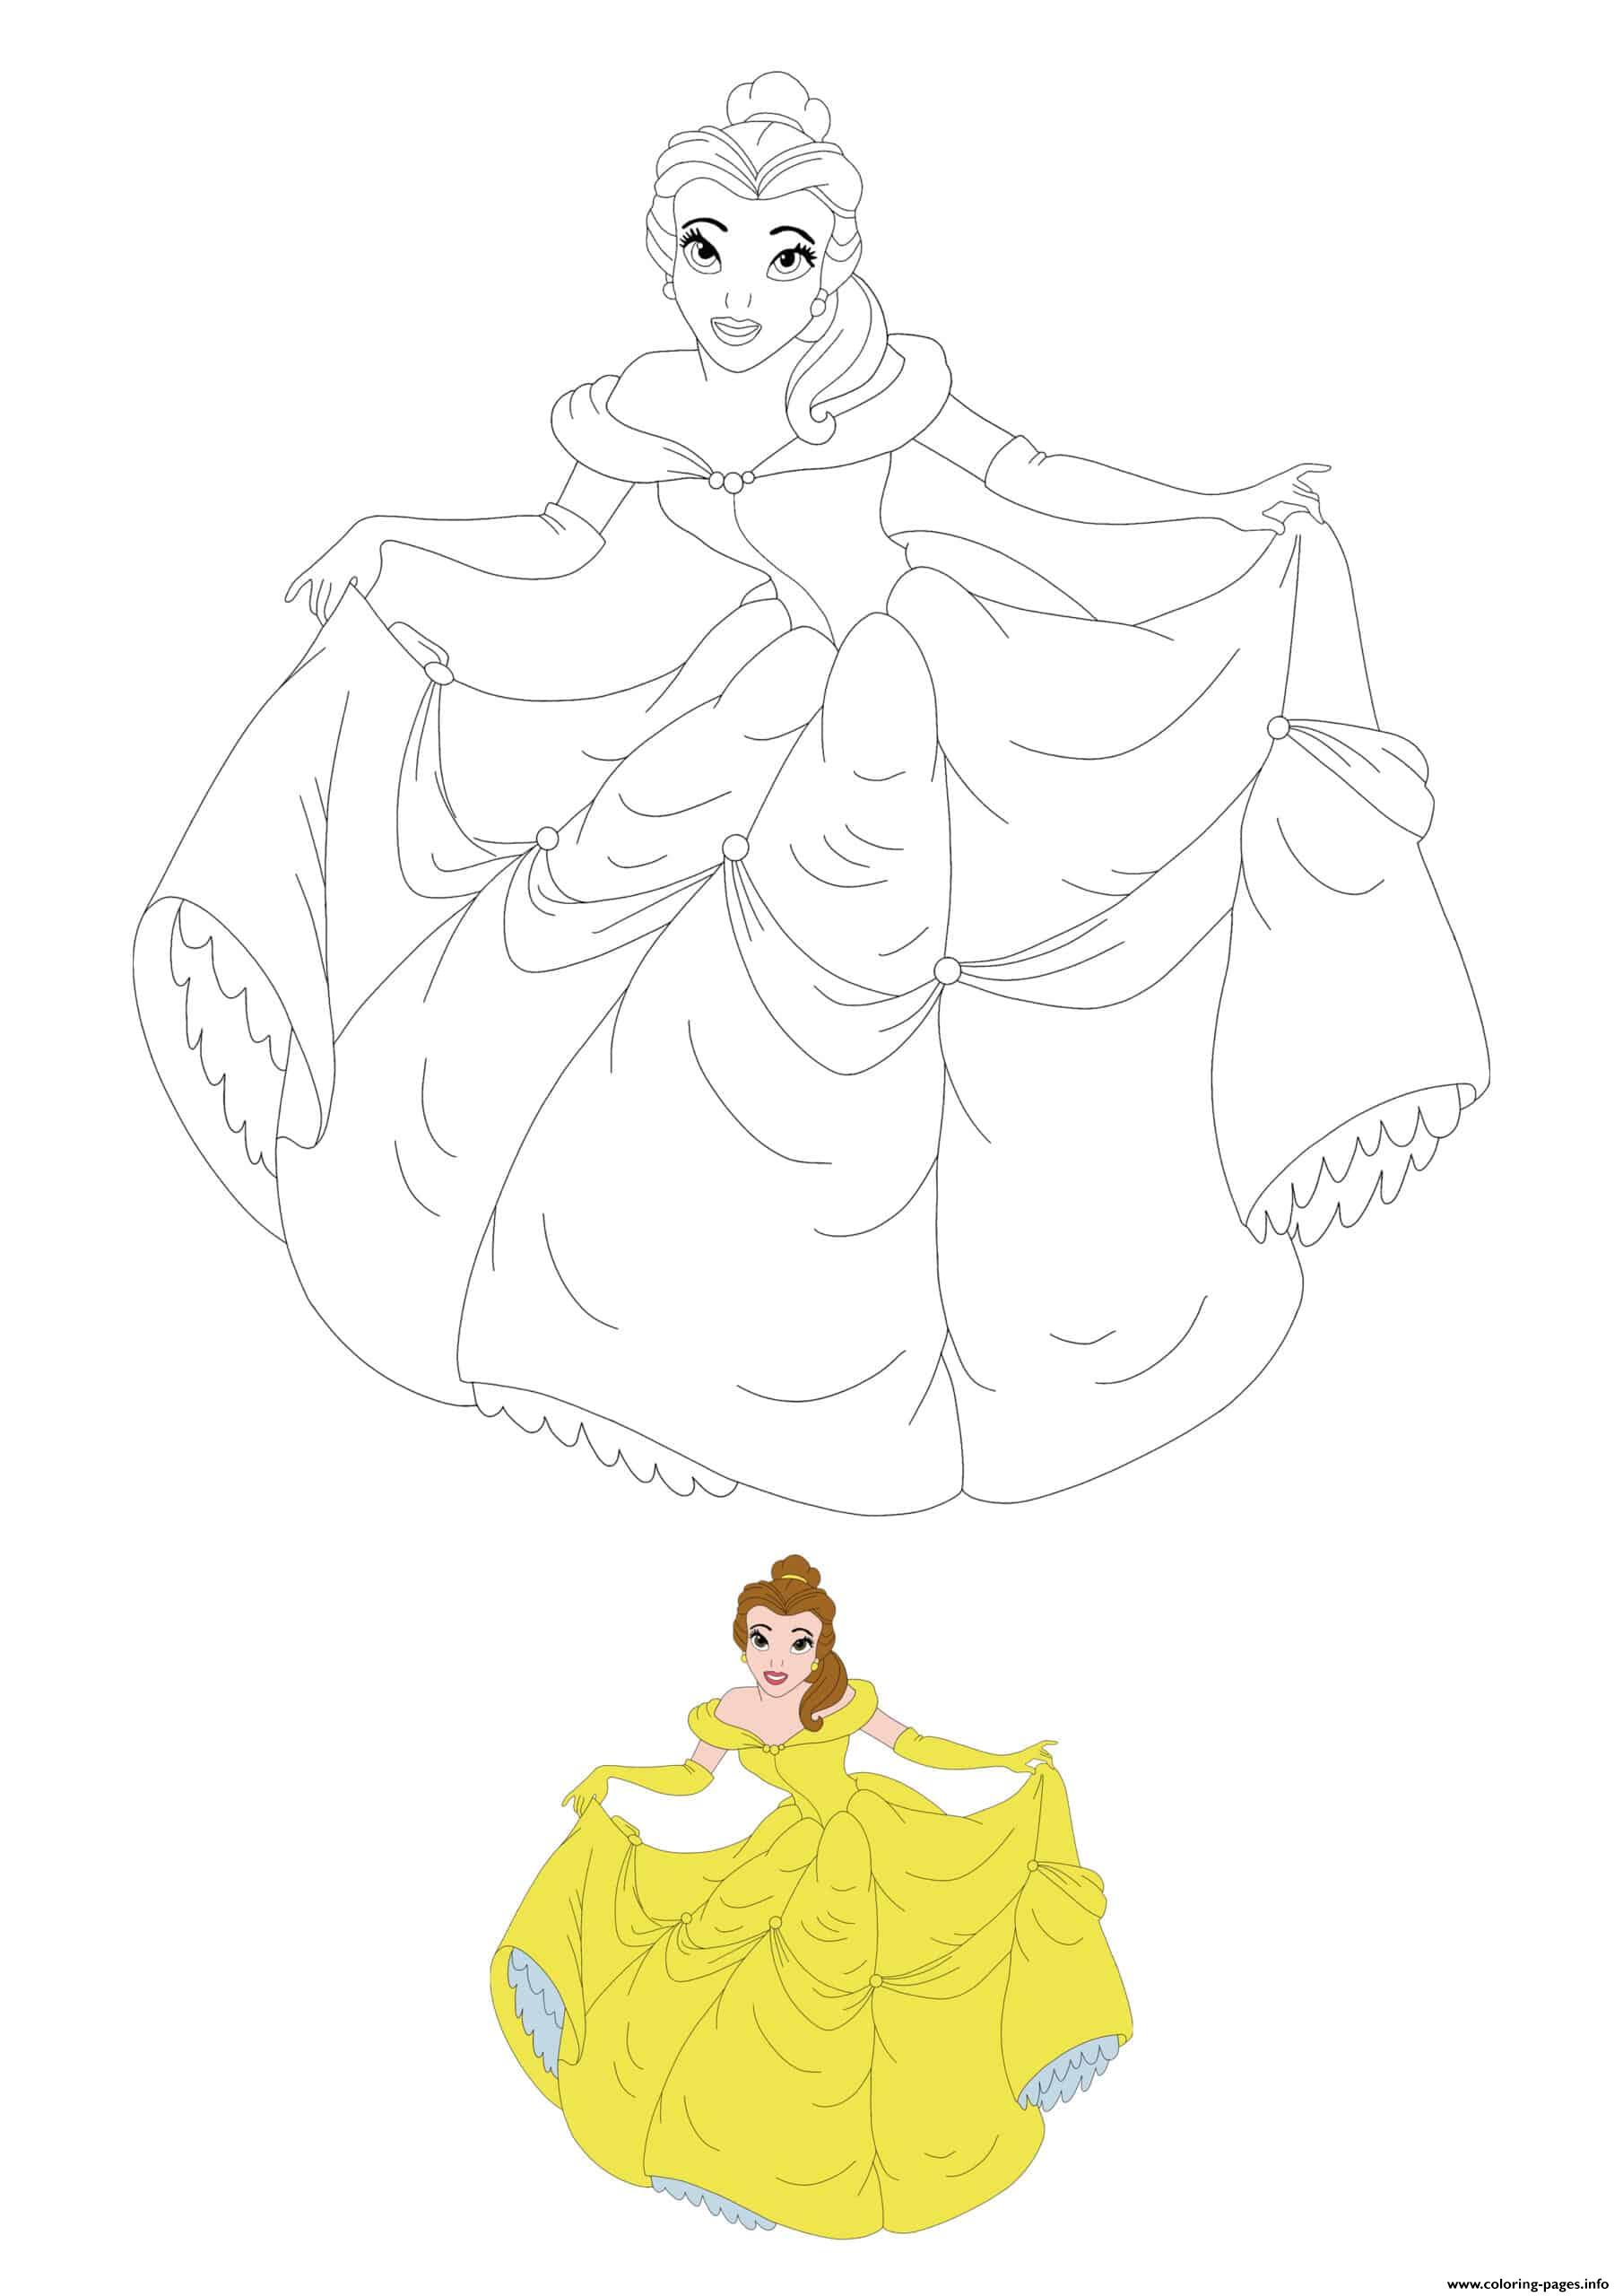 Disney Princess Belle coloring